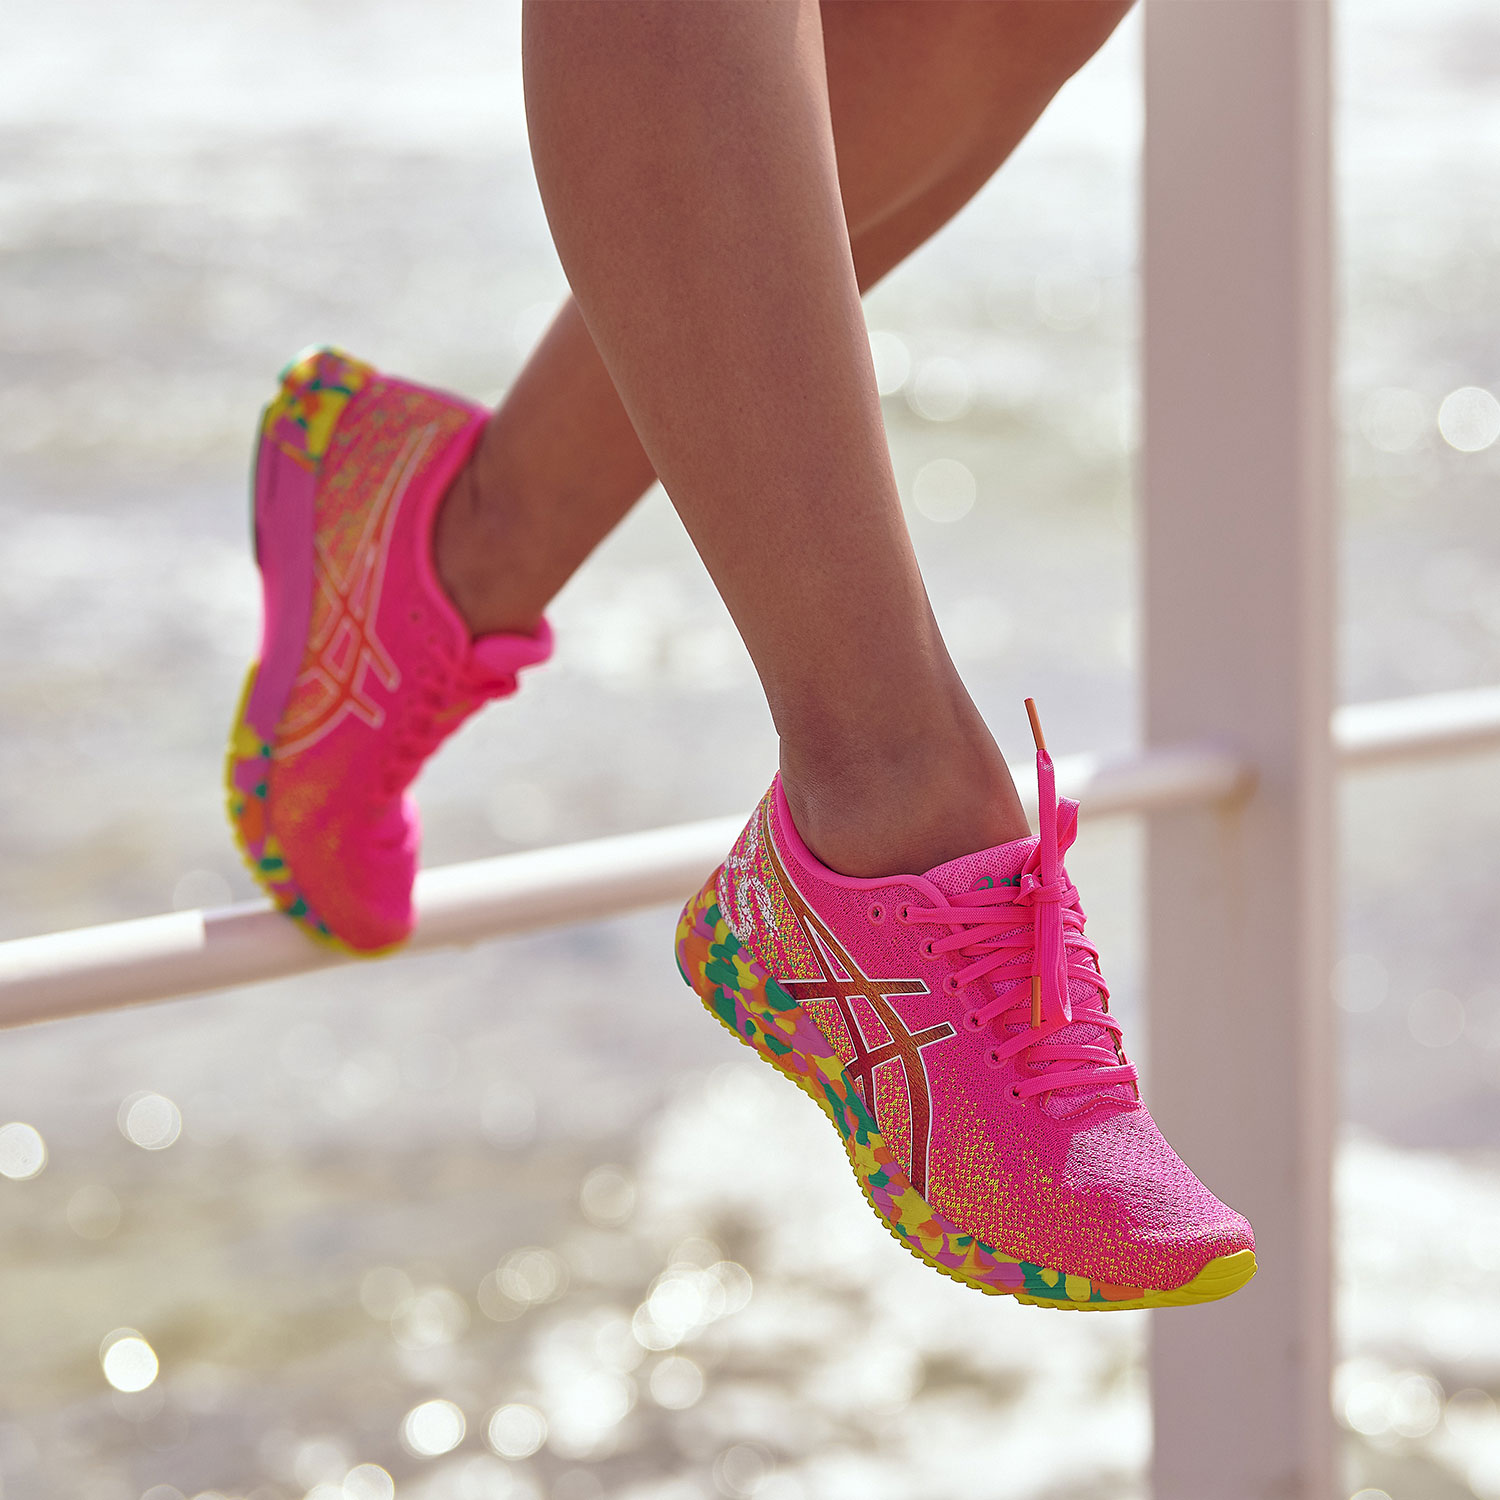 Asics Gel Ds Trainer 26 Women S Running Shoes Hot Pink